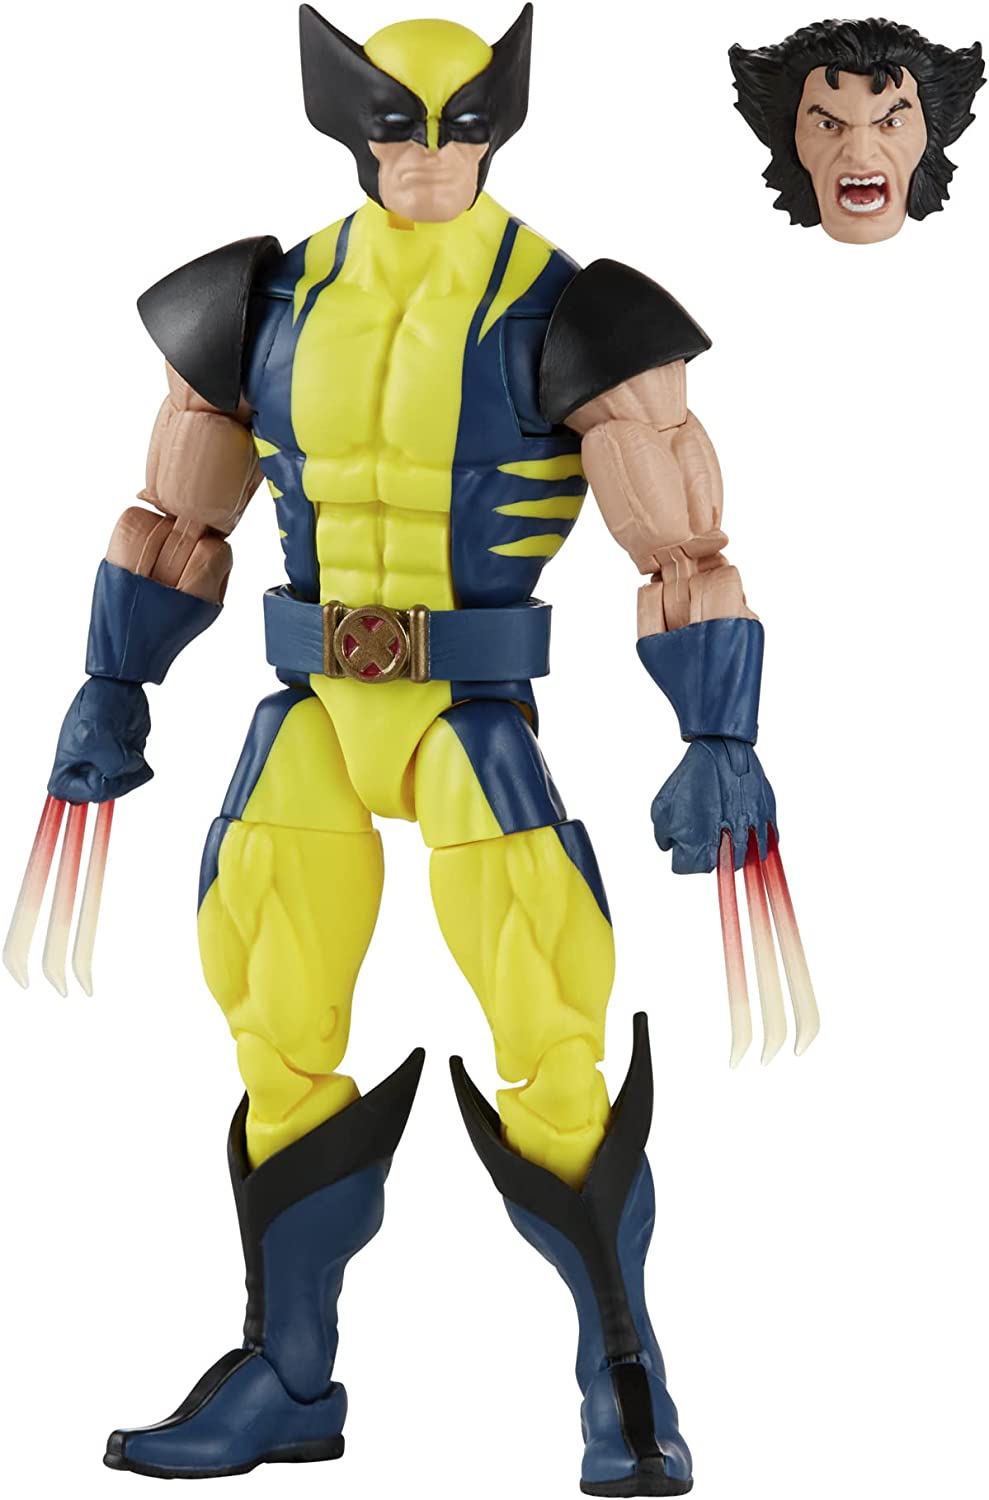 Marvel Legends Series X-Men Wolverine Return of Wolverine Action Figure 6-Inch Product Image